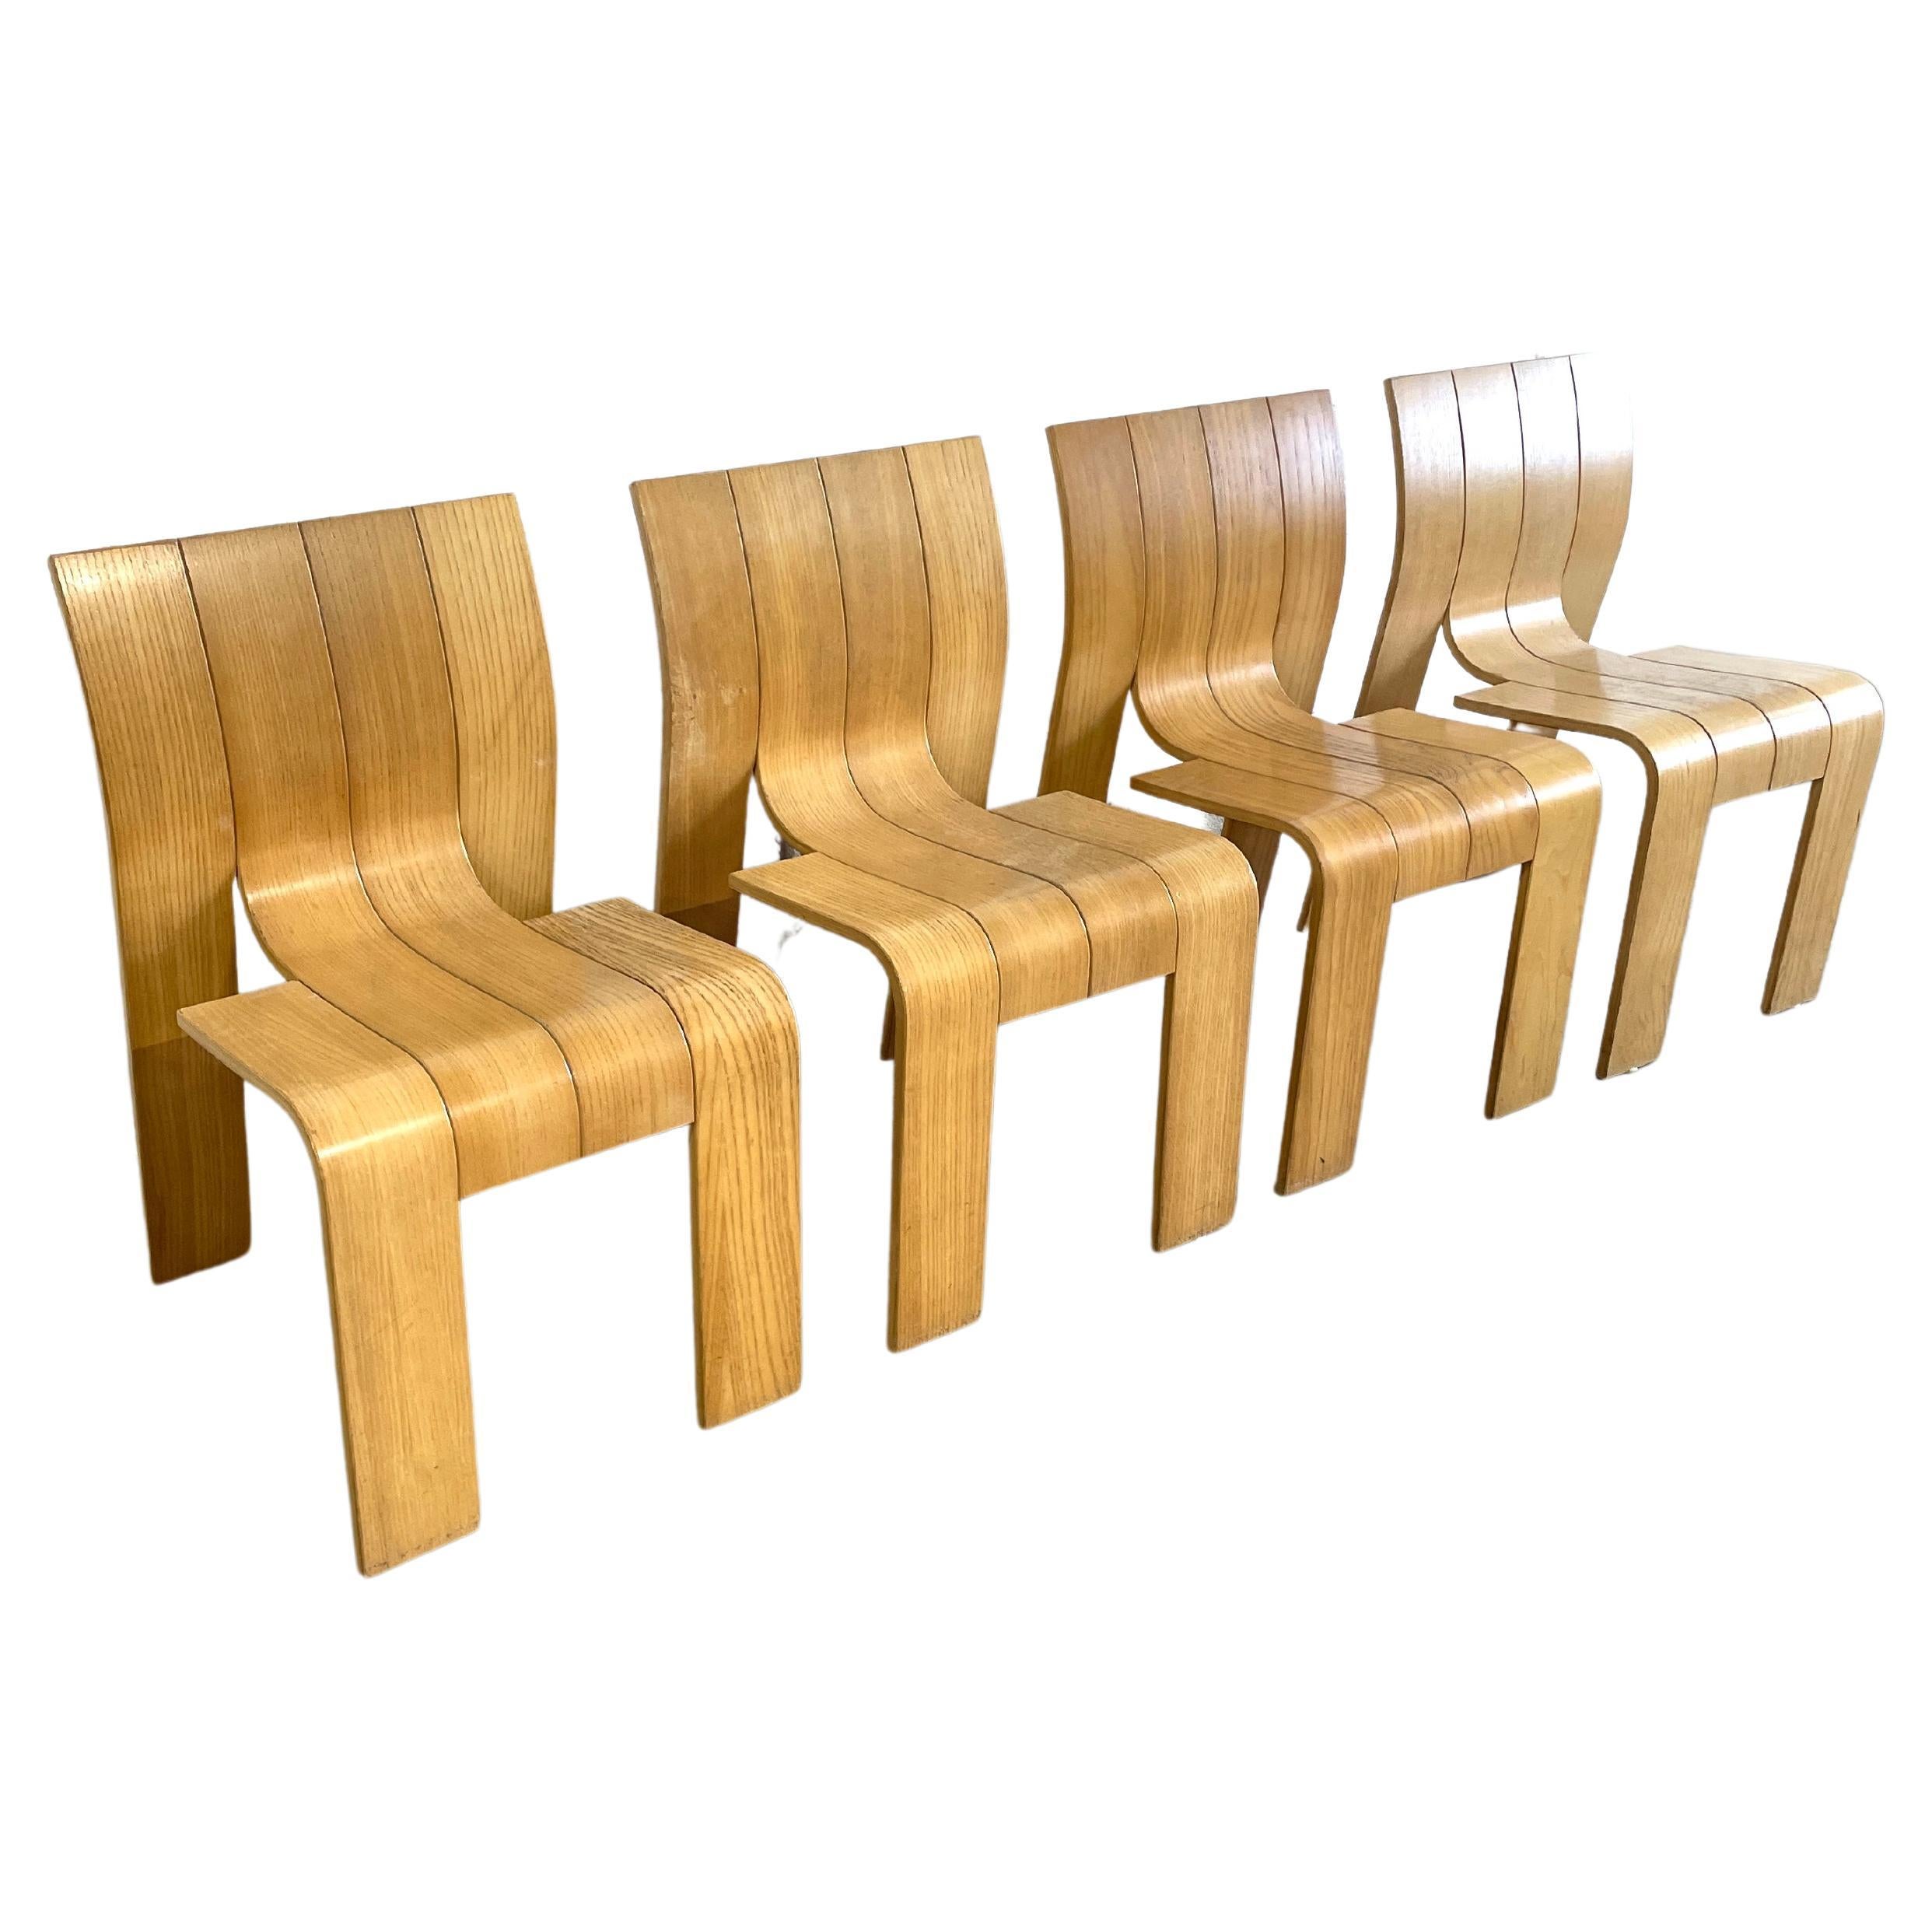 Gijs Bakker for Castelijn “Strip” Dining Chairs Mid Century Modern